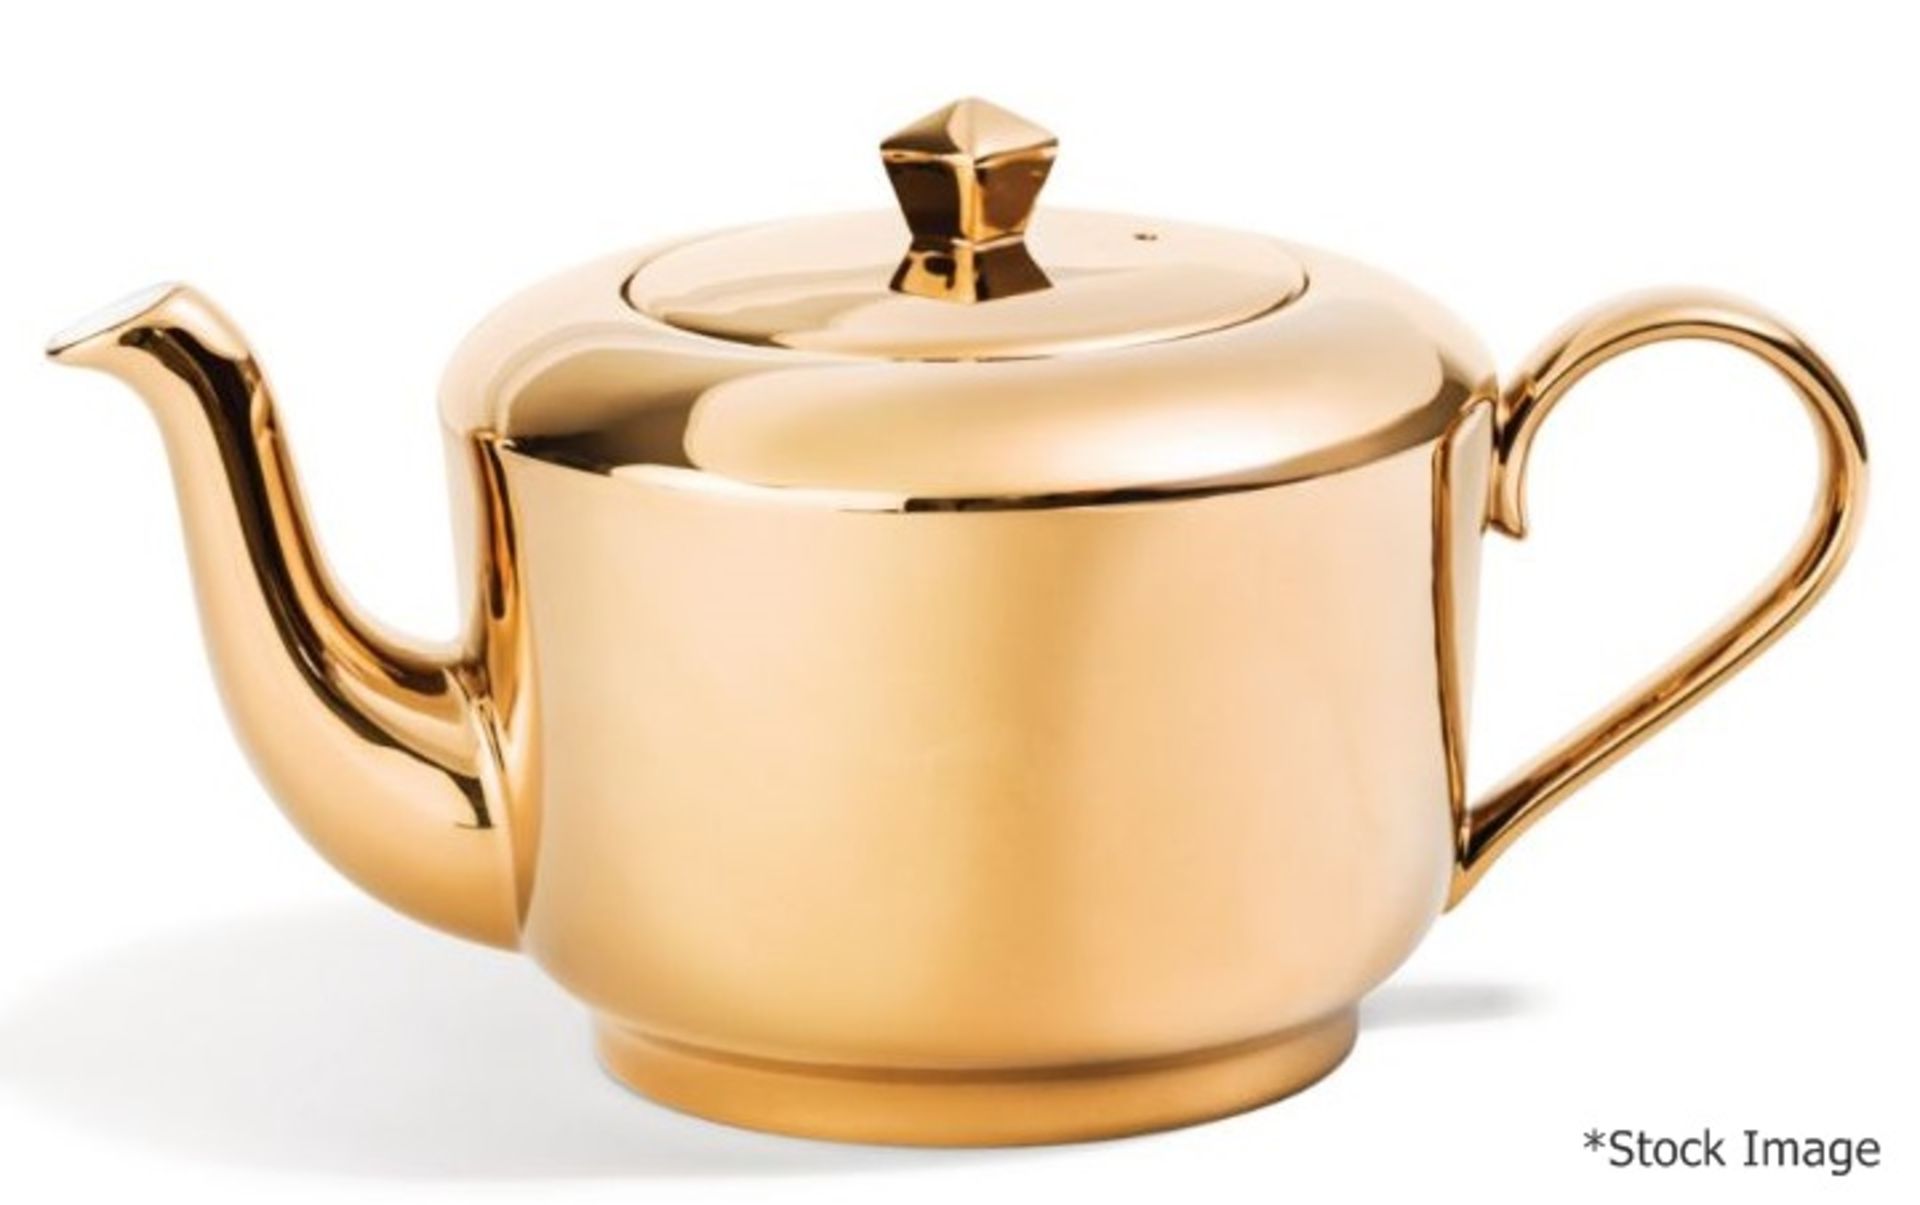 1 x RICHARD BRENDON 'Reflect' Fine Bone China Teapot In Gold - Original Price £250.00 *See Condition